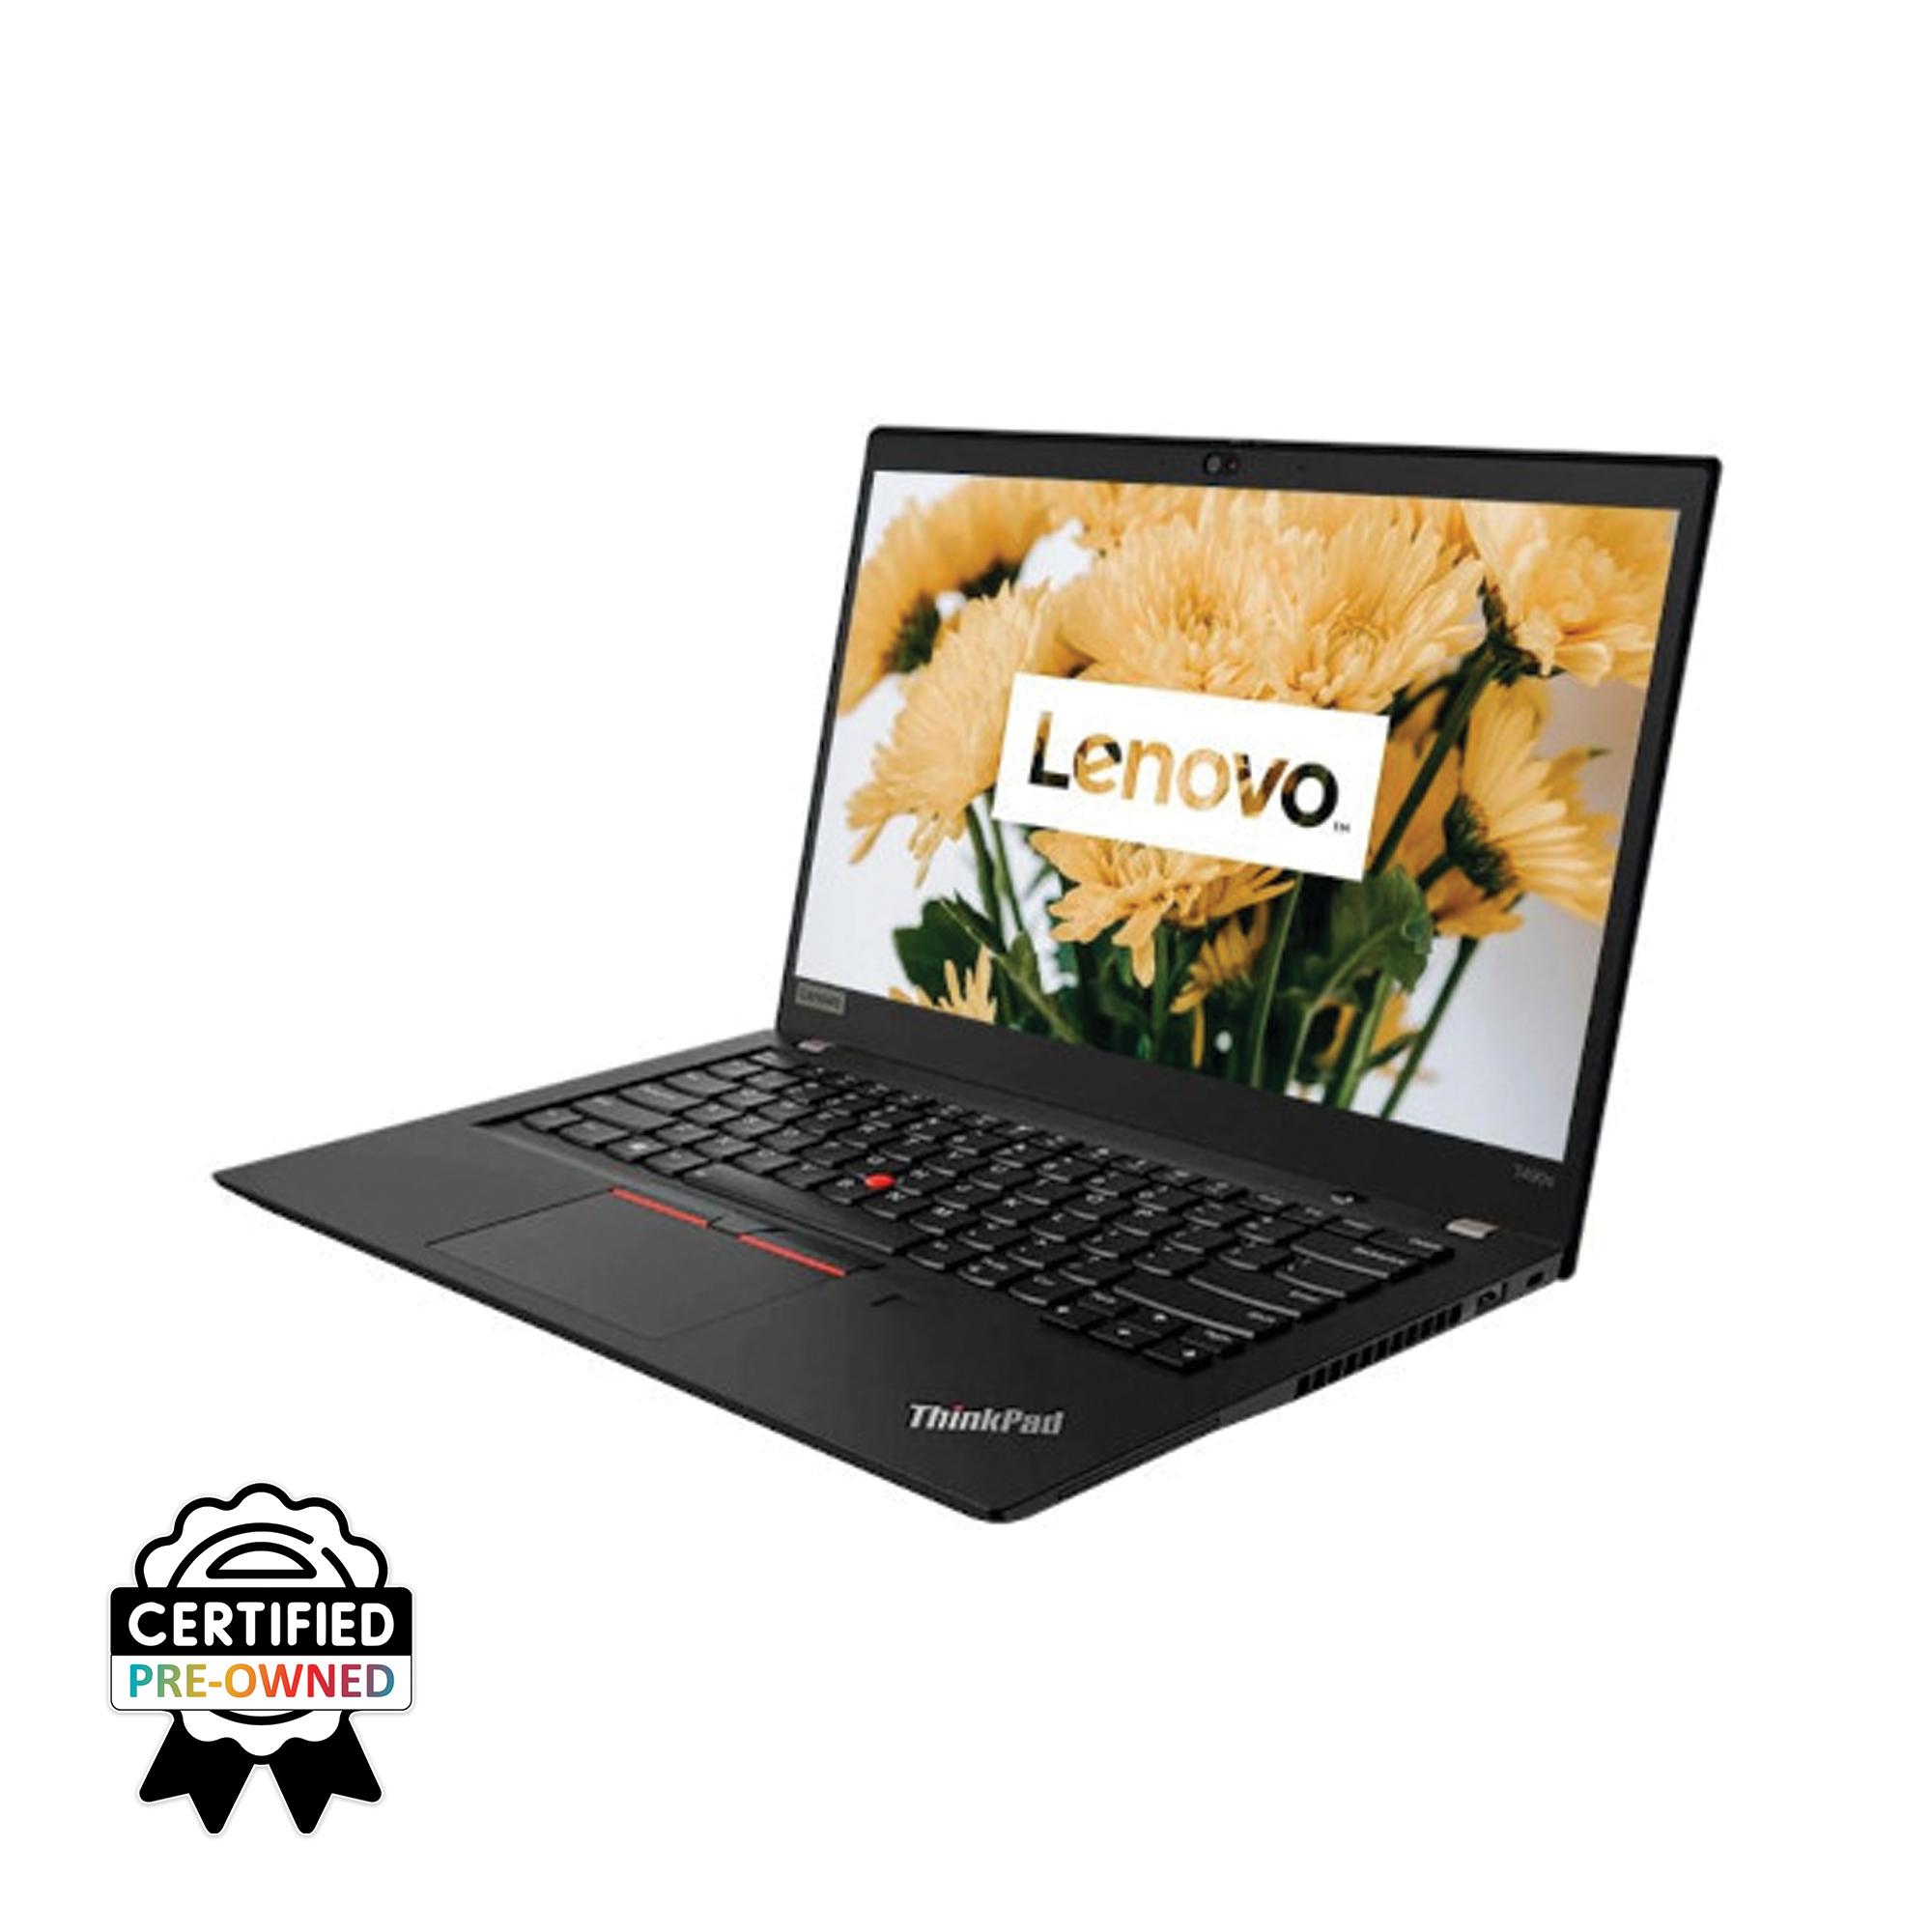 Lenovo ThinkPad T490s core i5 8th gen 8GB RAM 256GB SSD